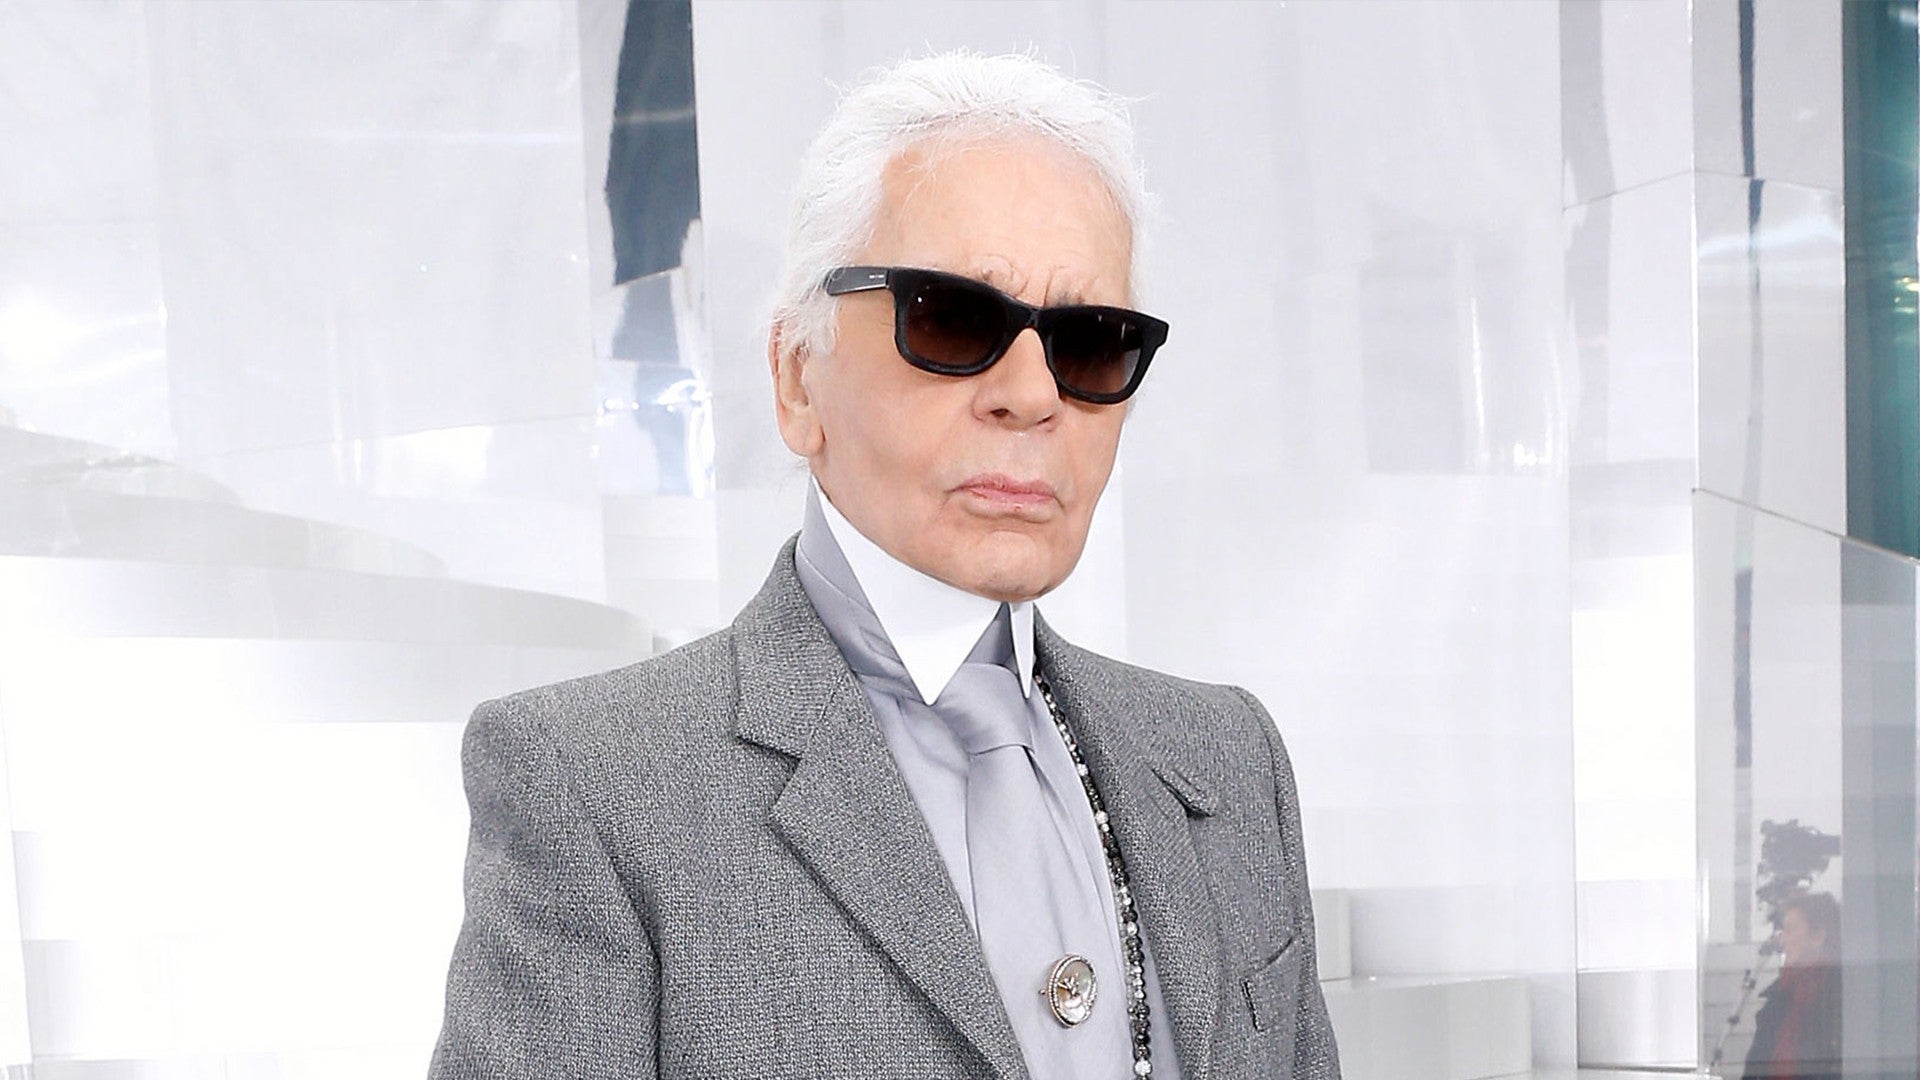 Karl Lagerfeld dead: Fashion legend Karl Lagerfeld has died aged 85